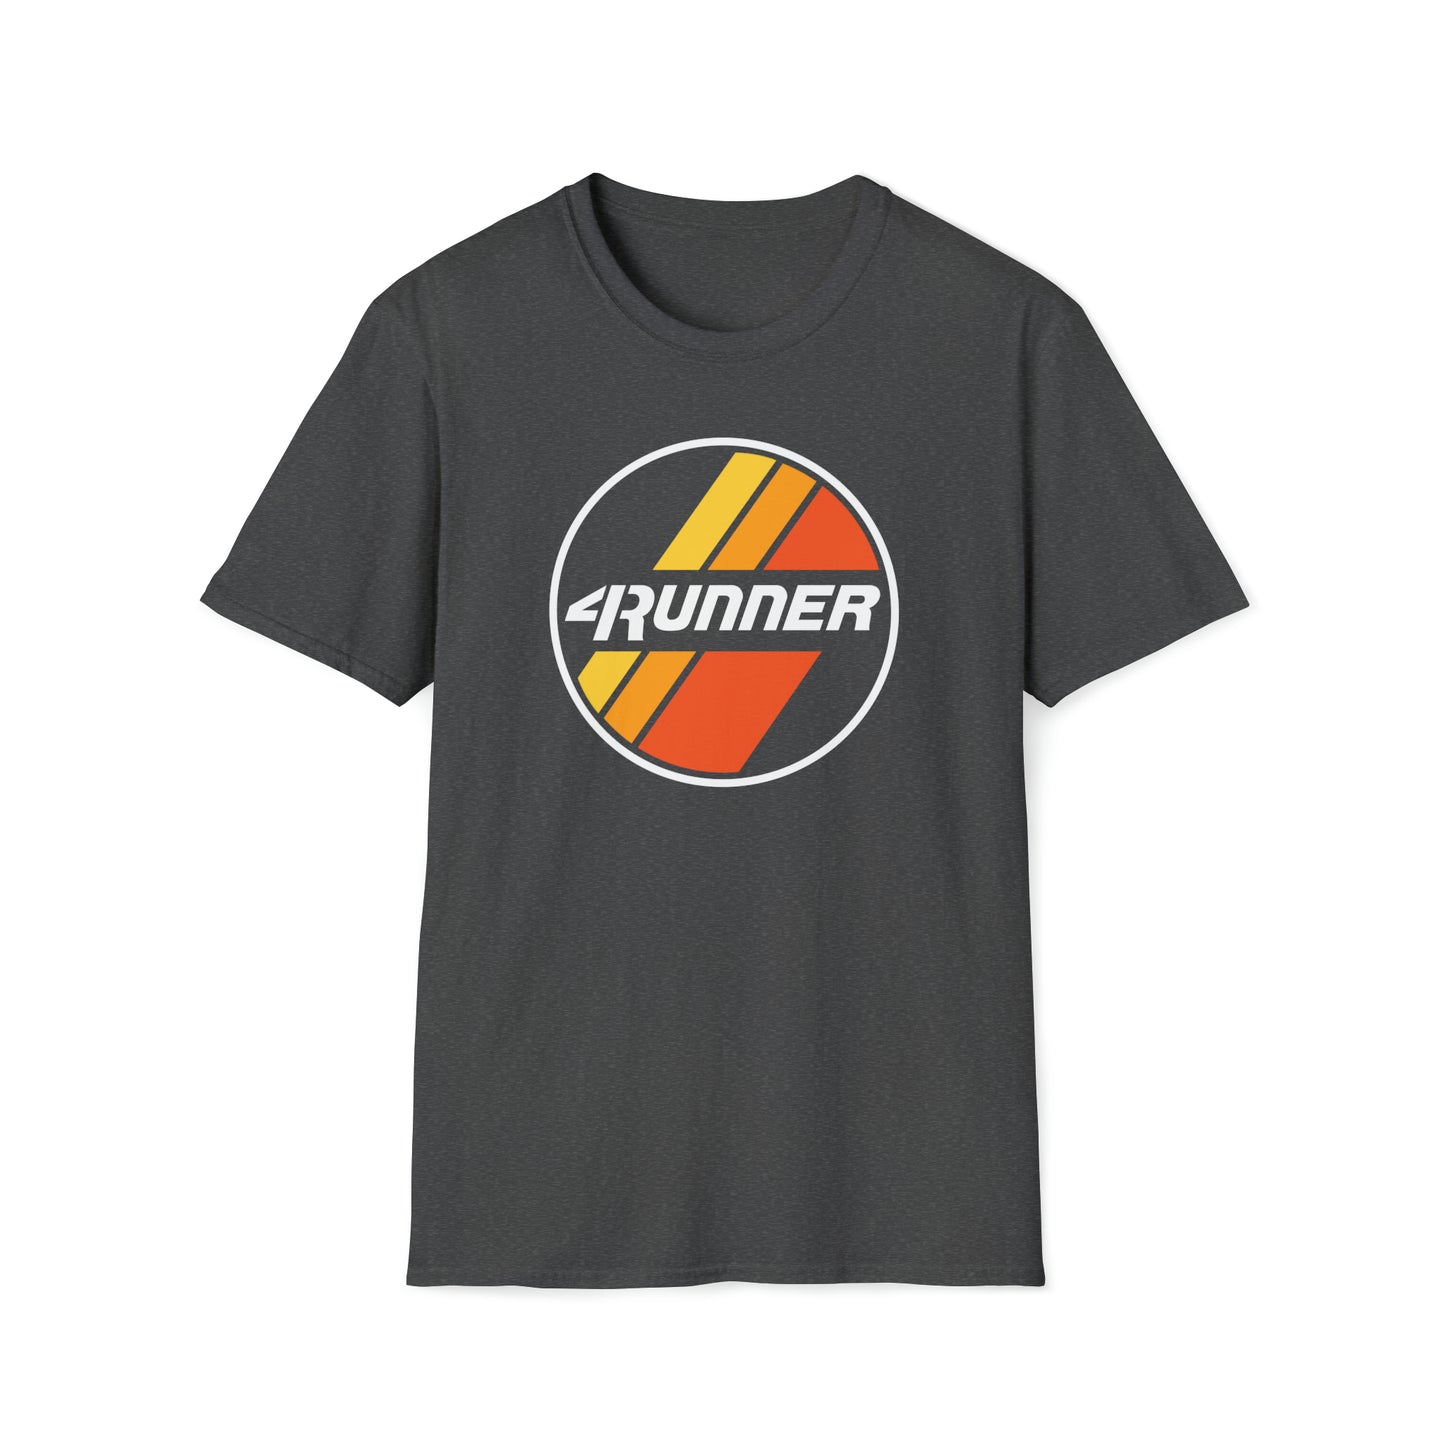 4Runner Retro Stripes Unisex Softstyle T-Shirt